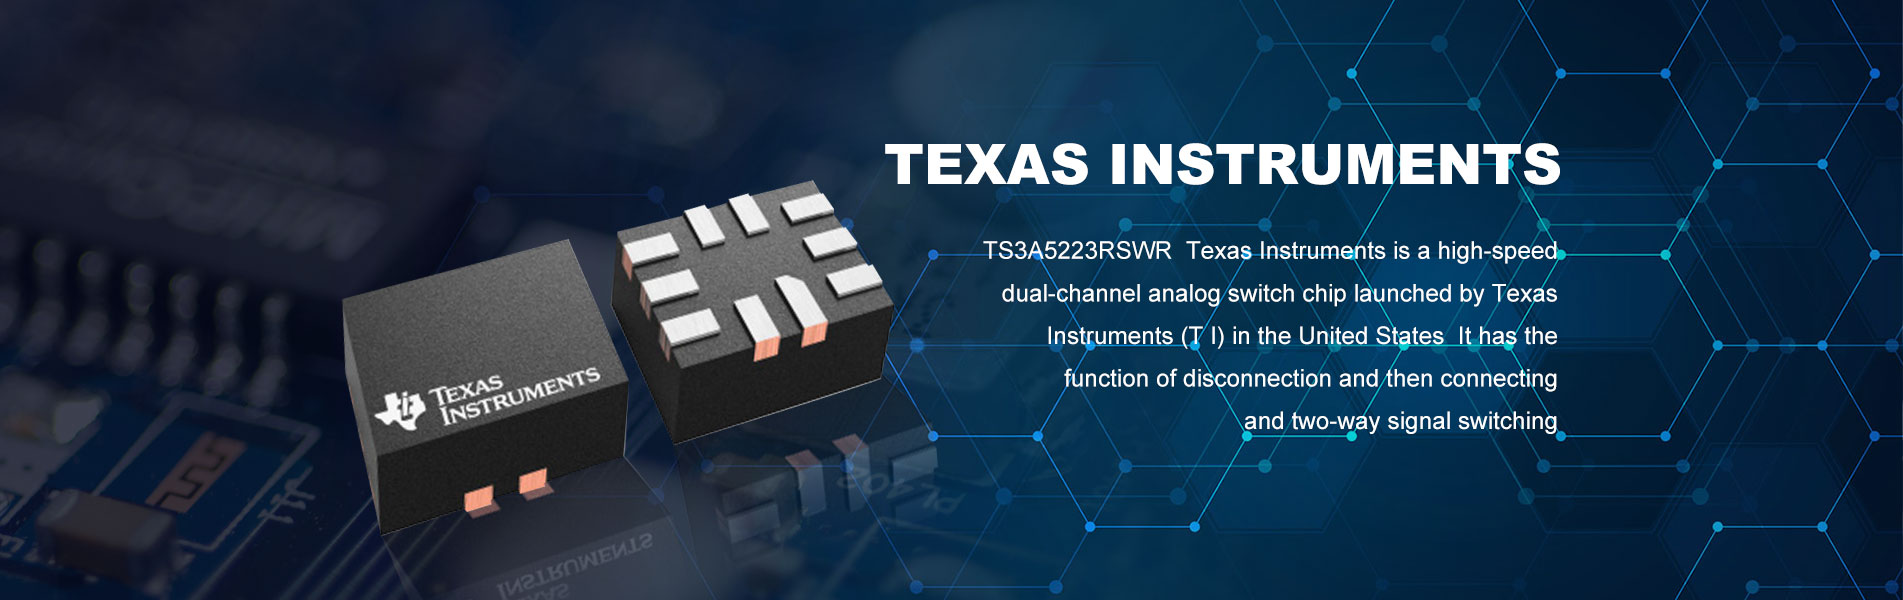 Texas Instrumenta Suppliers